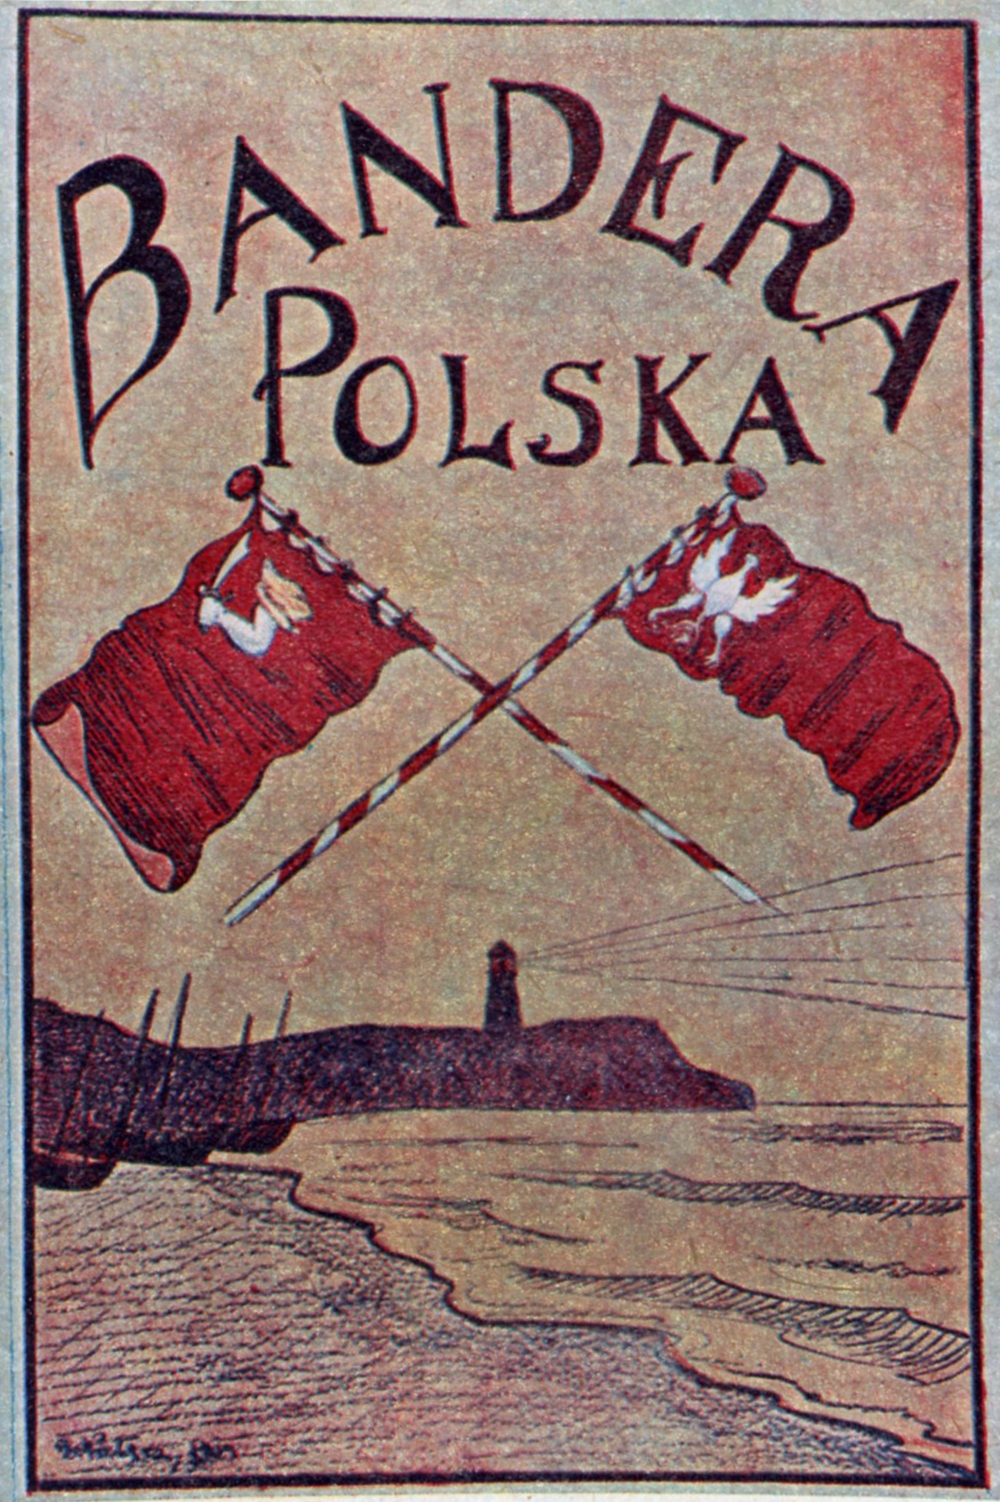 Bandera Polska